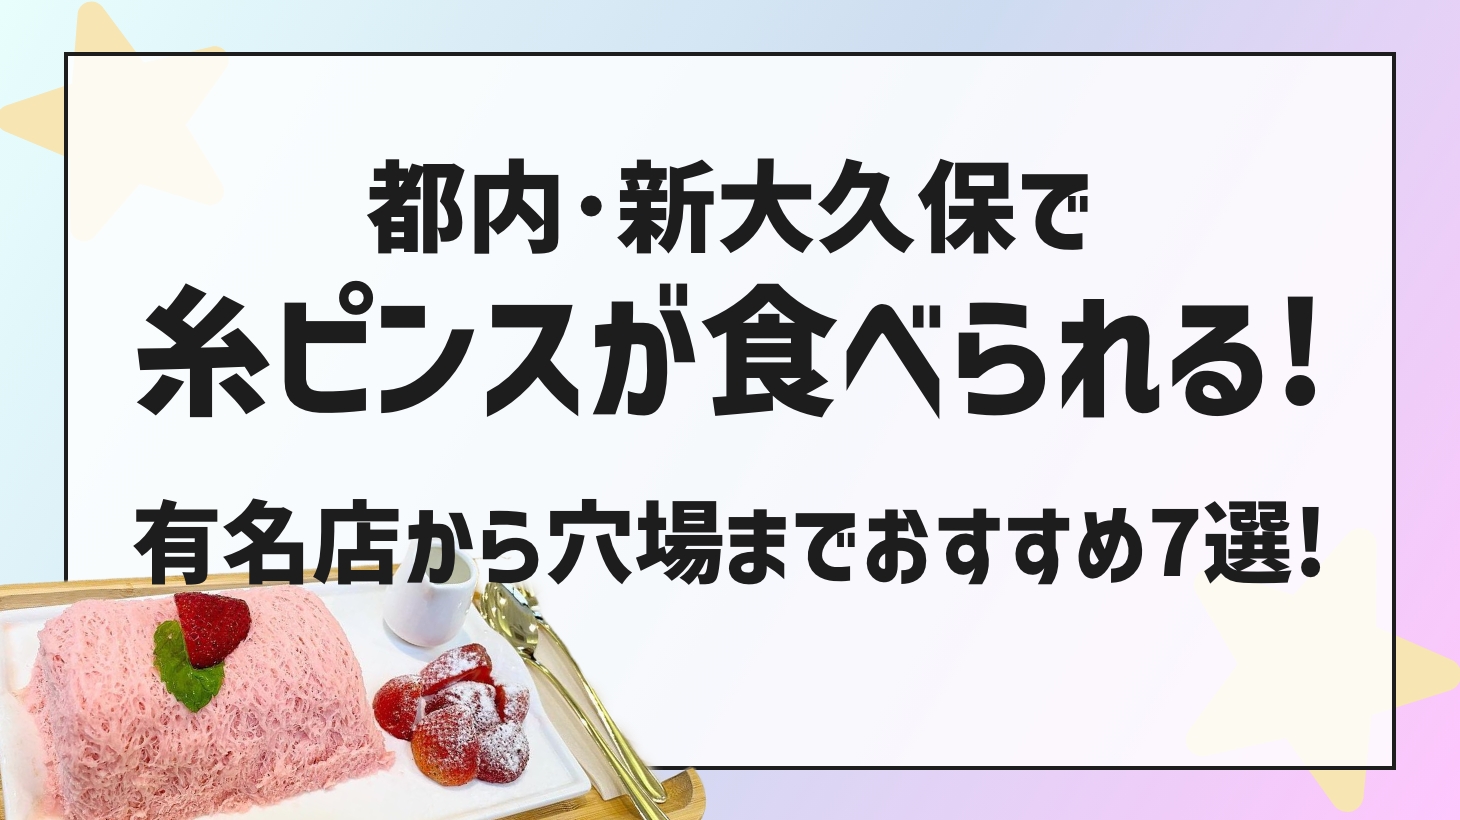 Thread Pins Shin-Okubo store information summary! Here for Korean shaved ice!